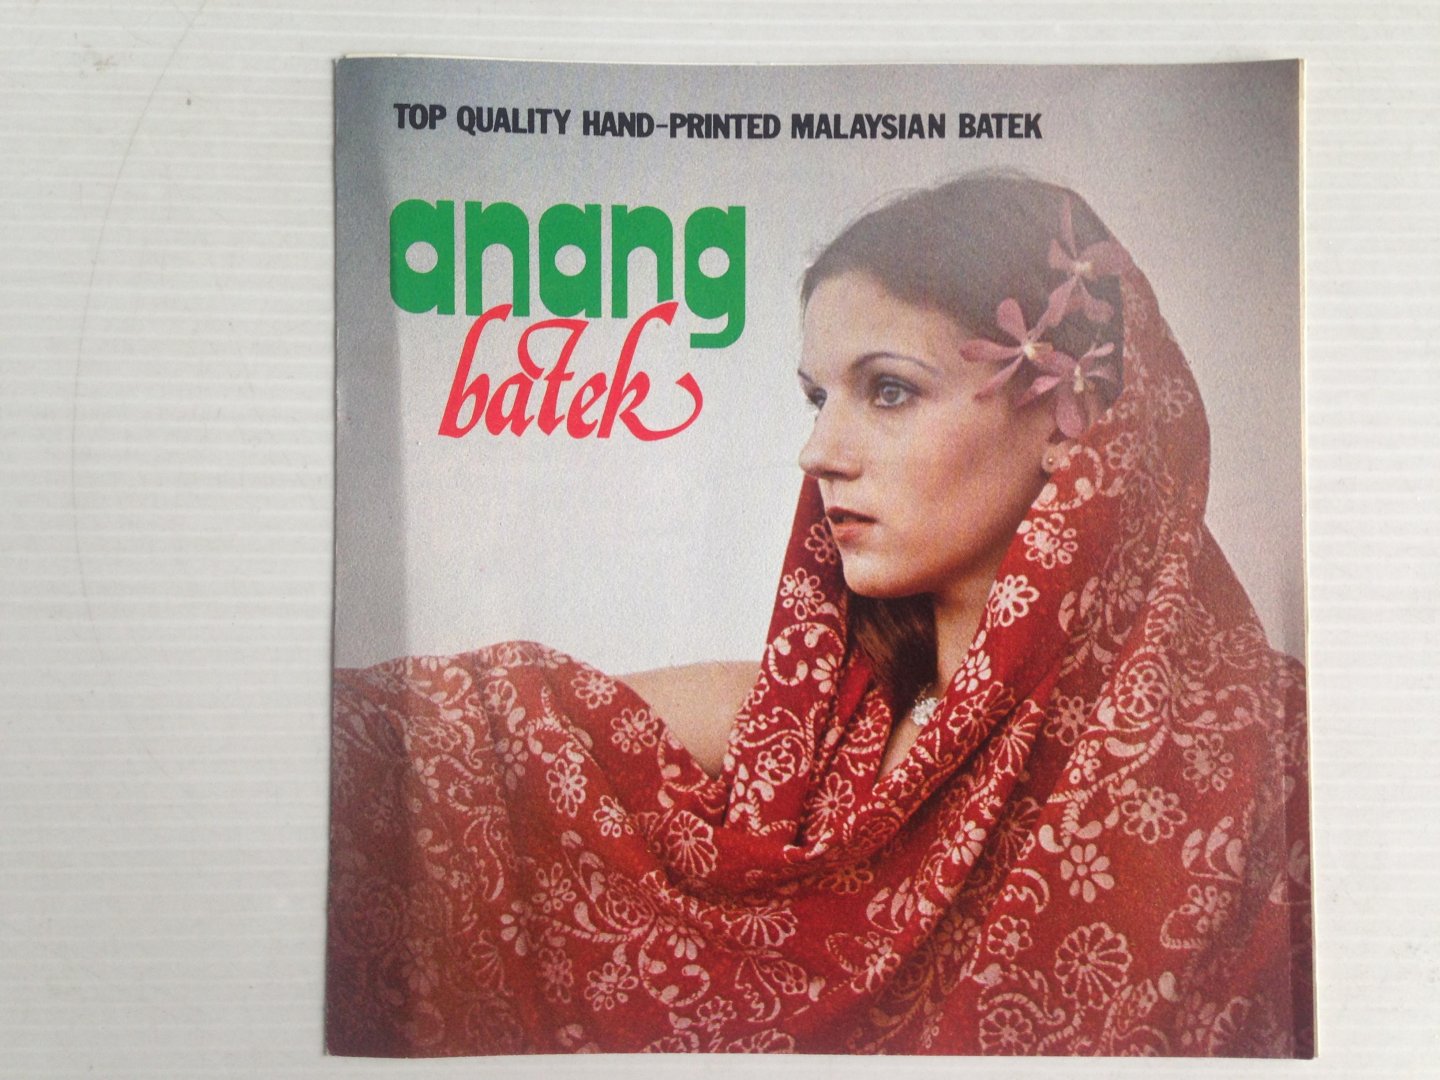  - Batik folder Maleisie Anang Batek, Top Quality Hand-Printed Malaysian Batek